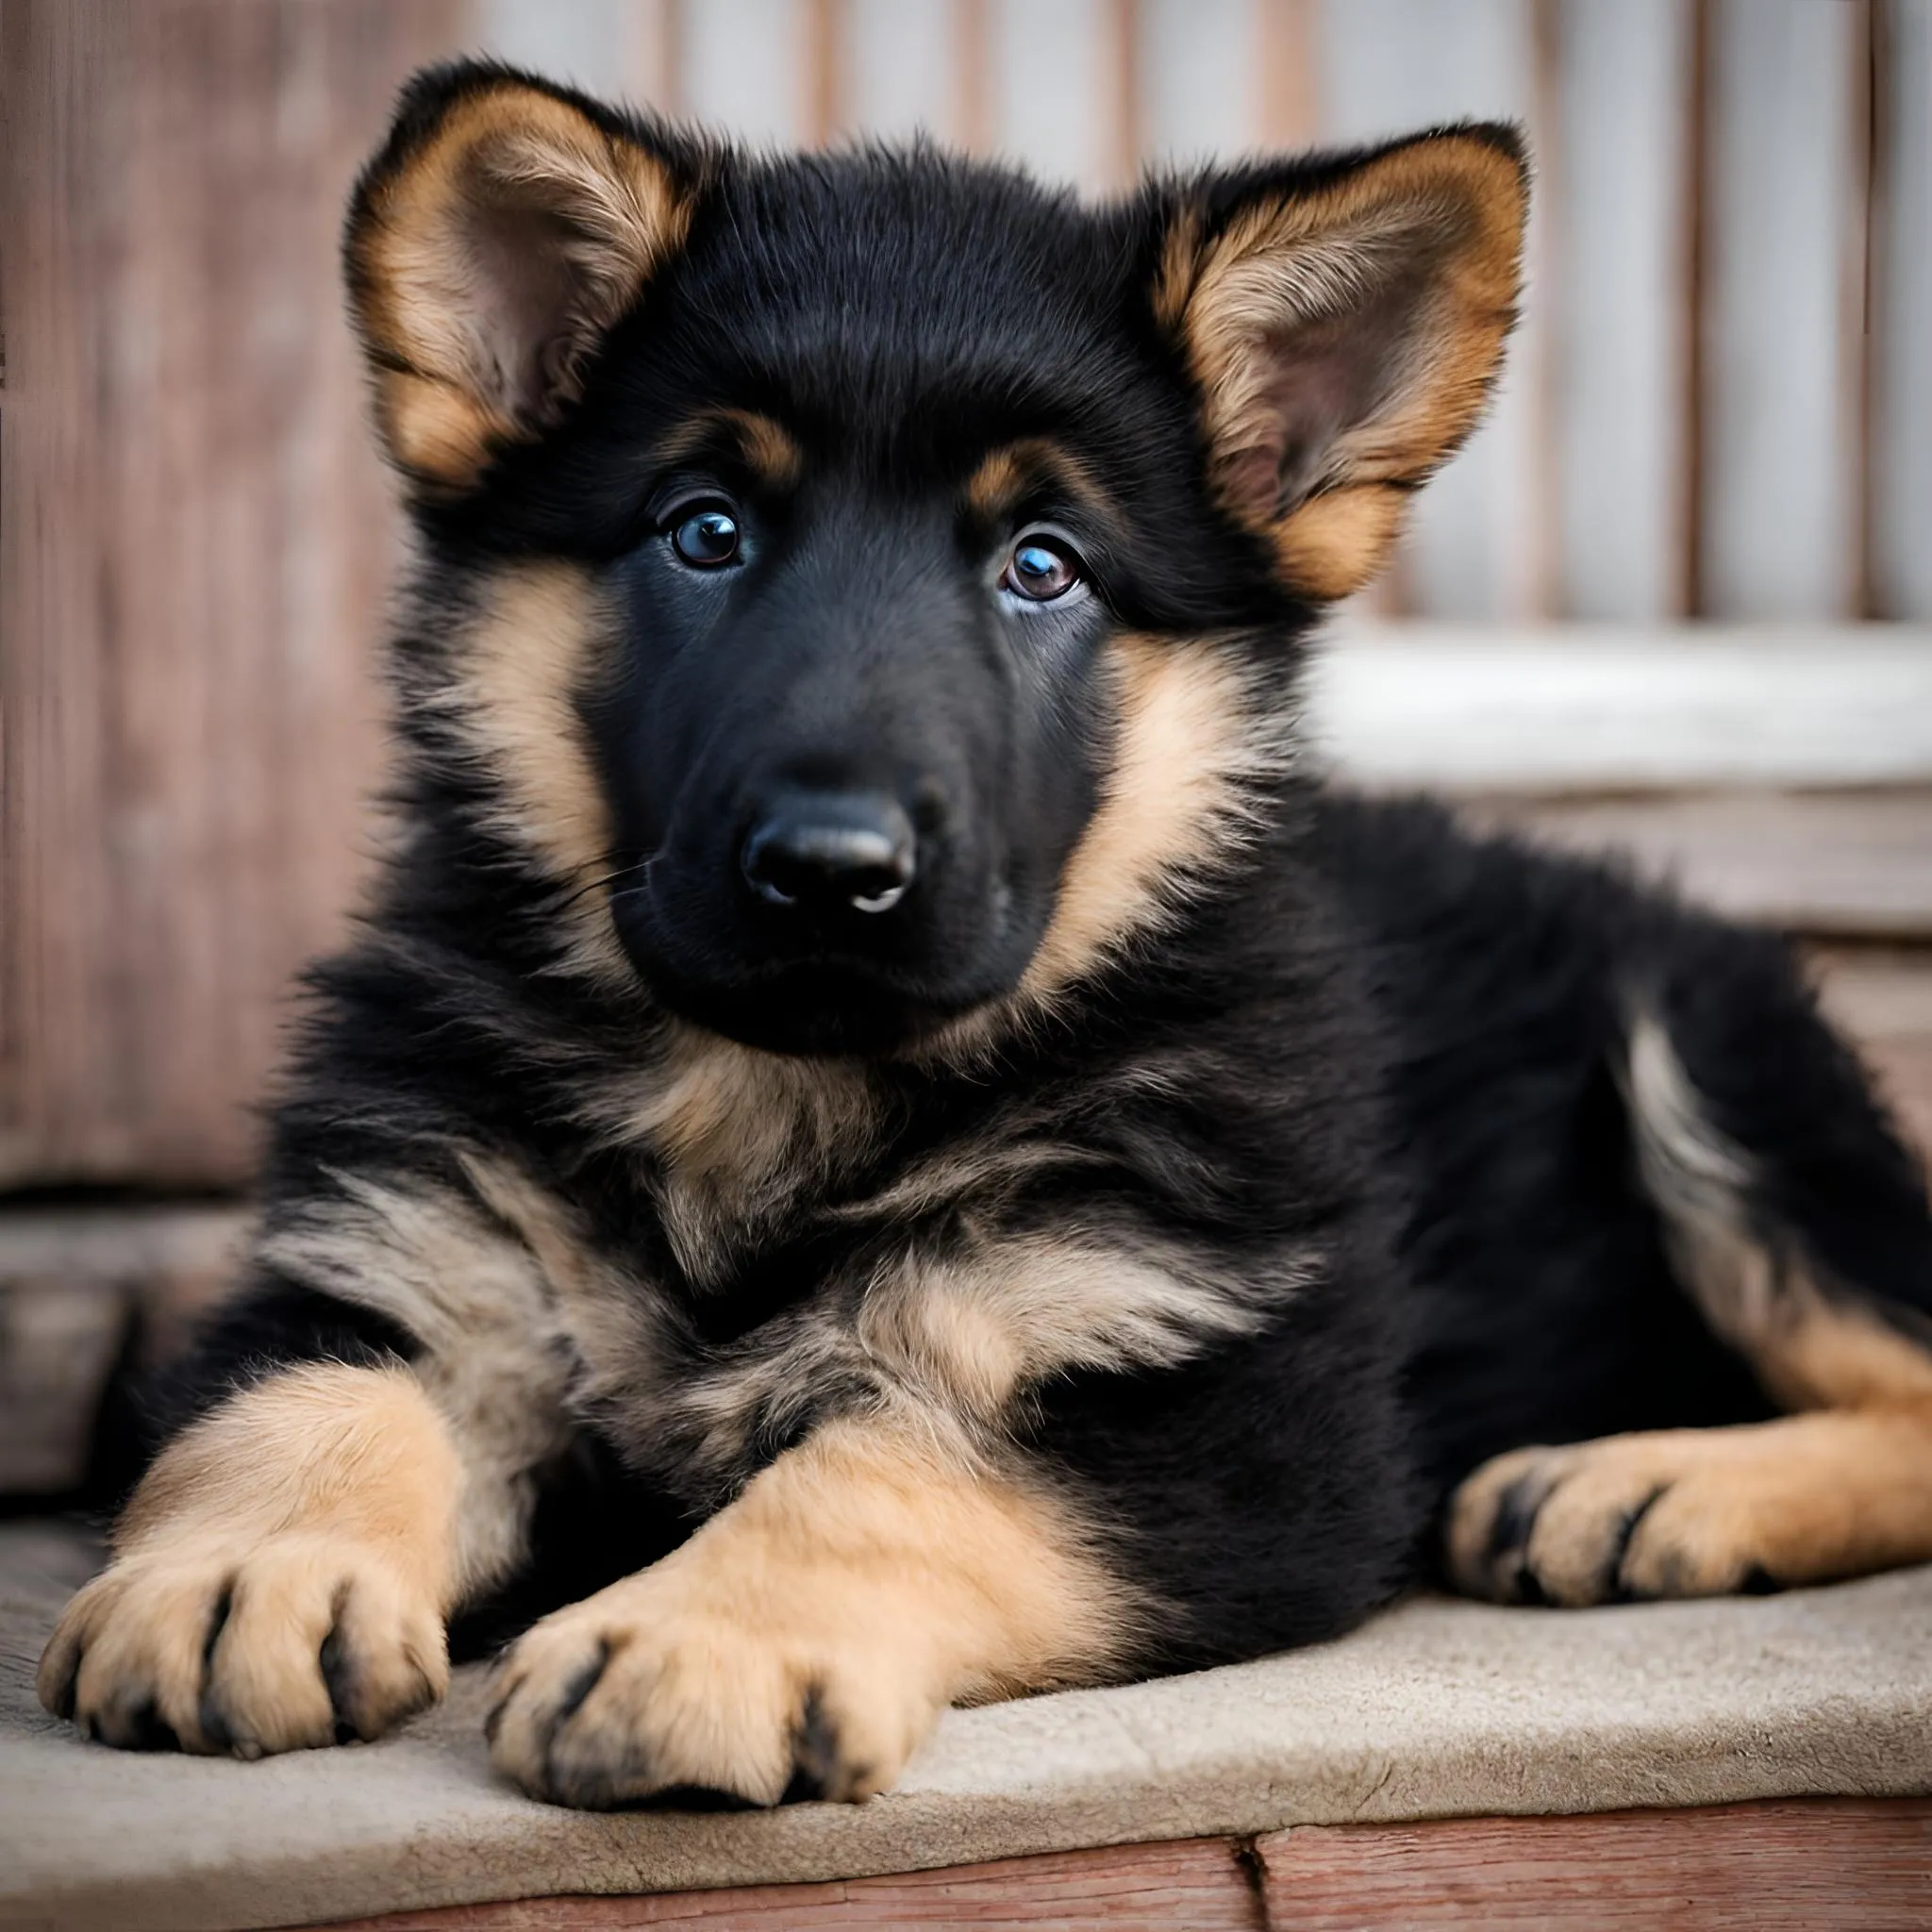 Example of a fake/impure German Shepherd puppy.